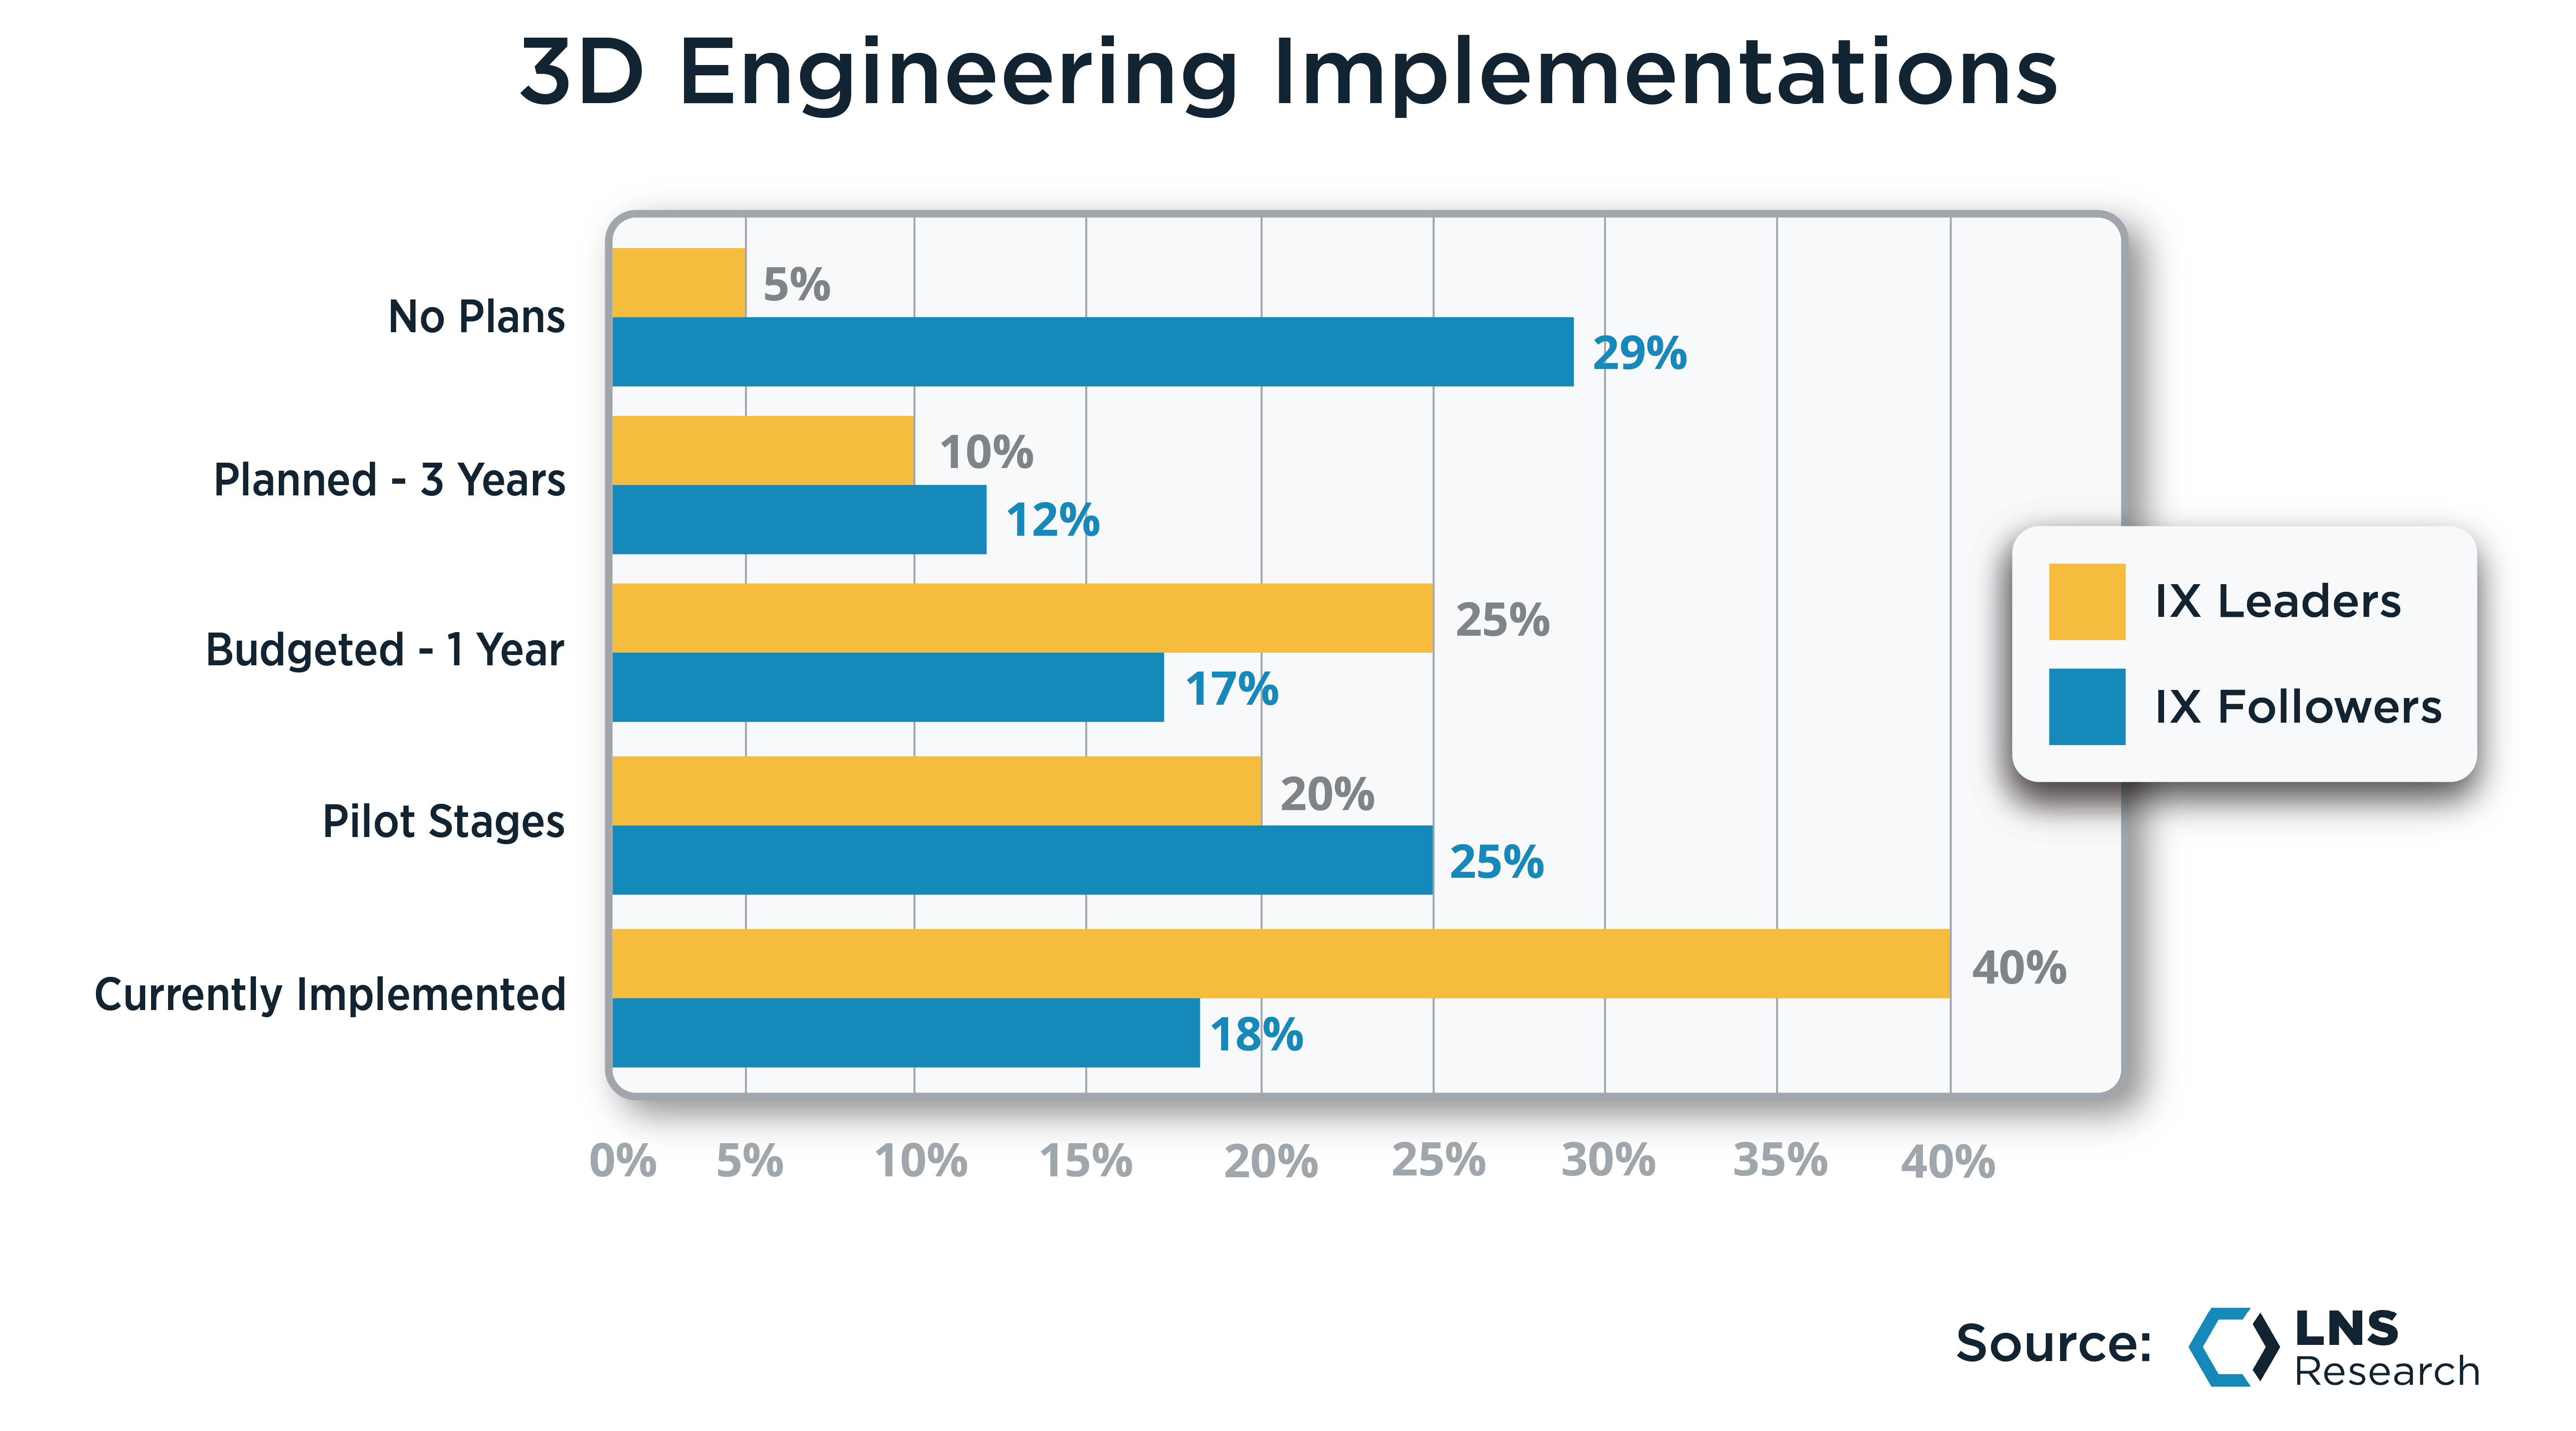 3D Engineering Implementations, IX Leaders vs. IX Followers